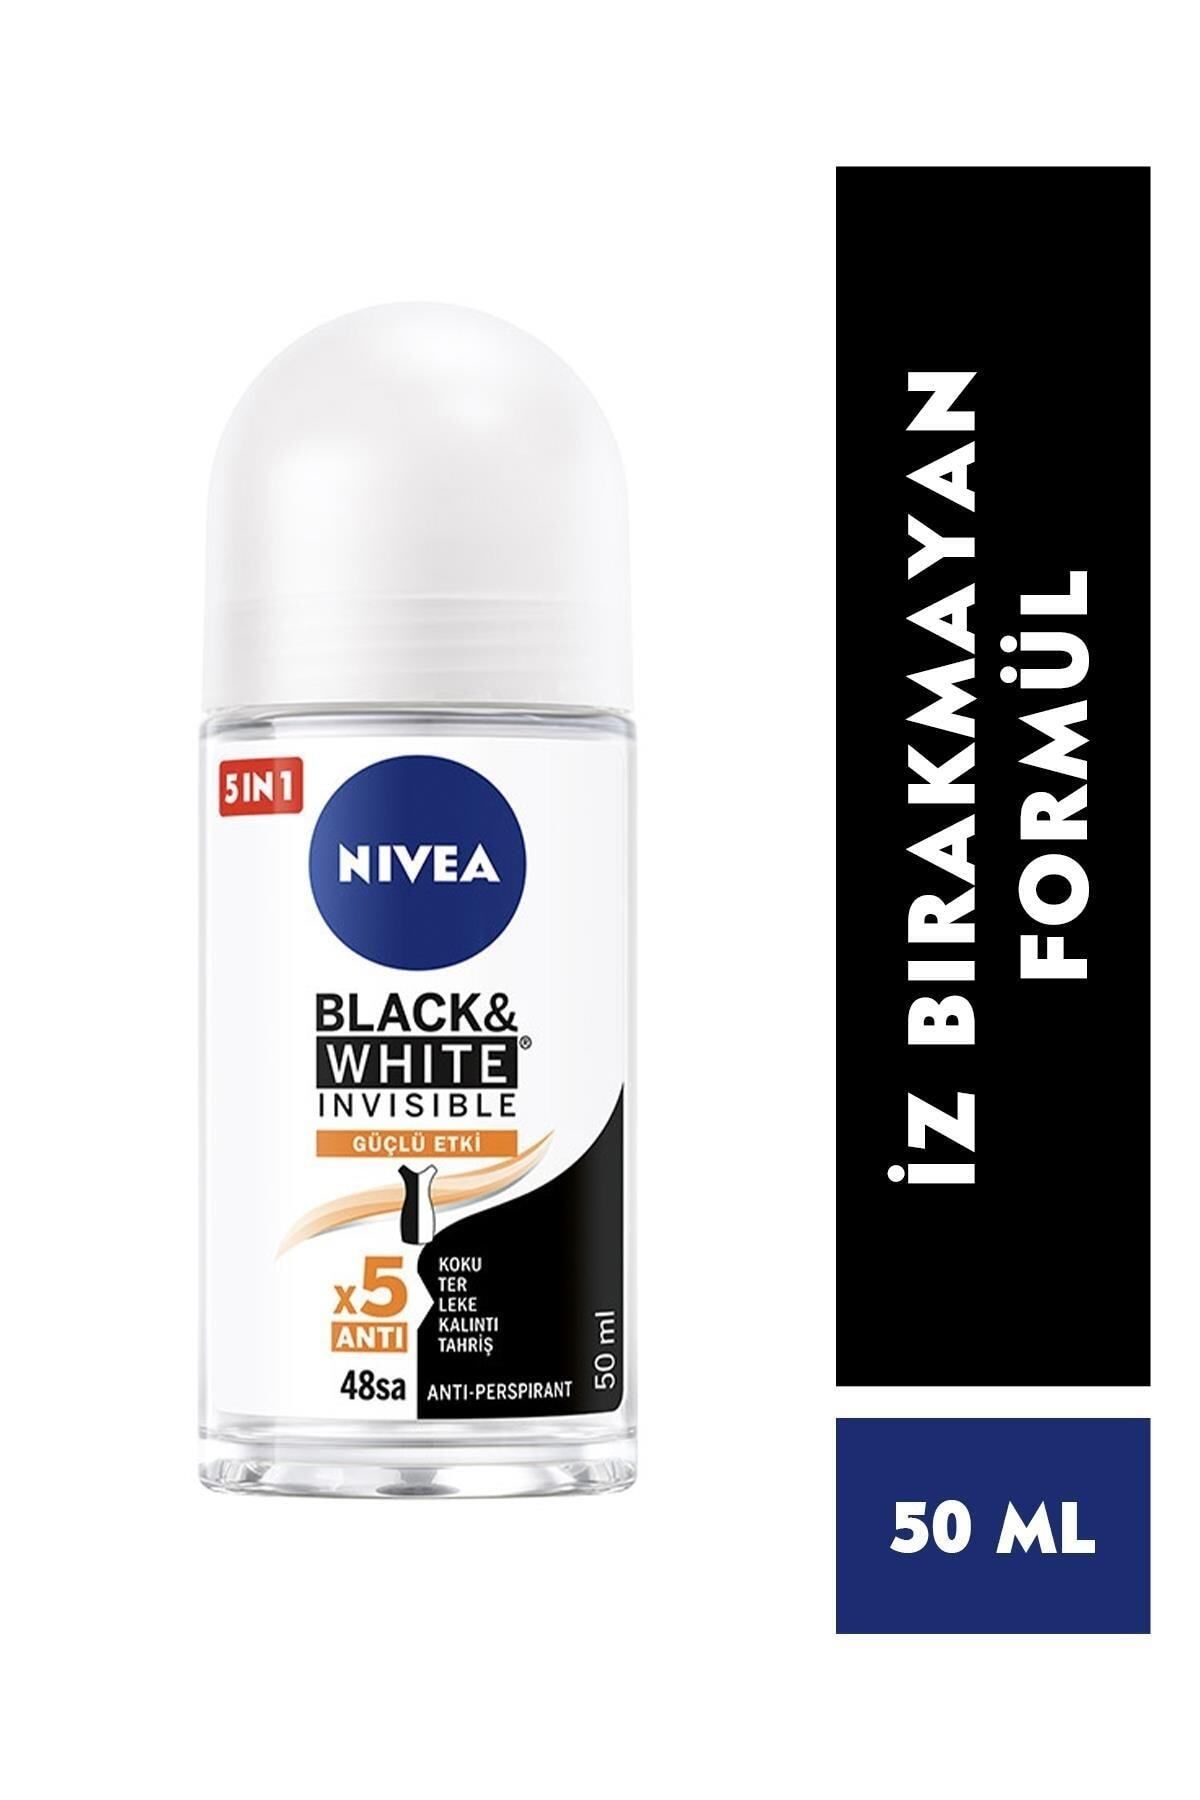 NIVEA Kadın Roll-on Black & White Invisible Güçlü Etki 50 ml 48 Saat Anti-Perspirant